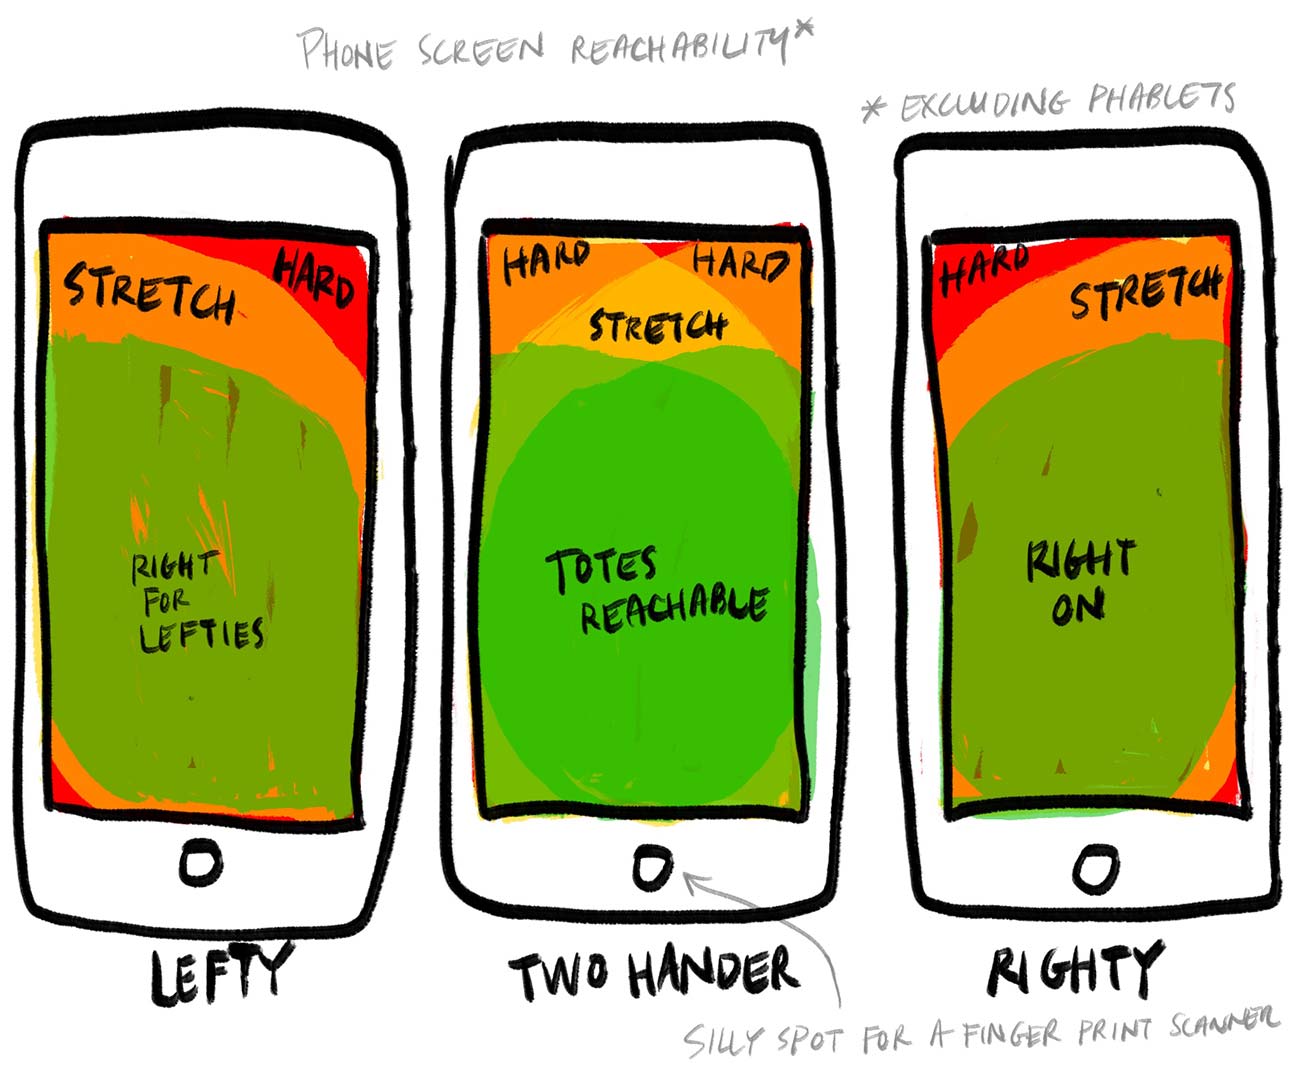 Reachability on phones for web design